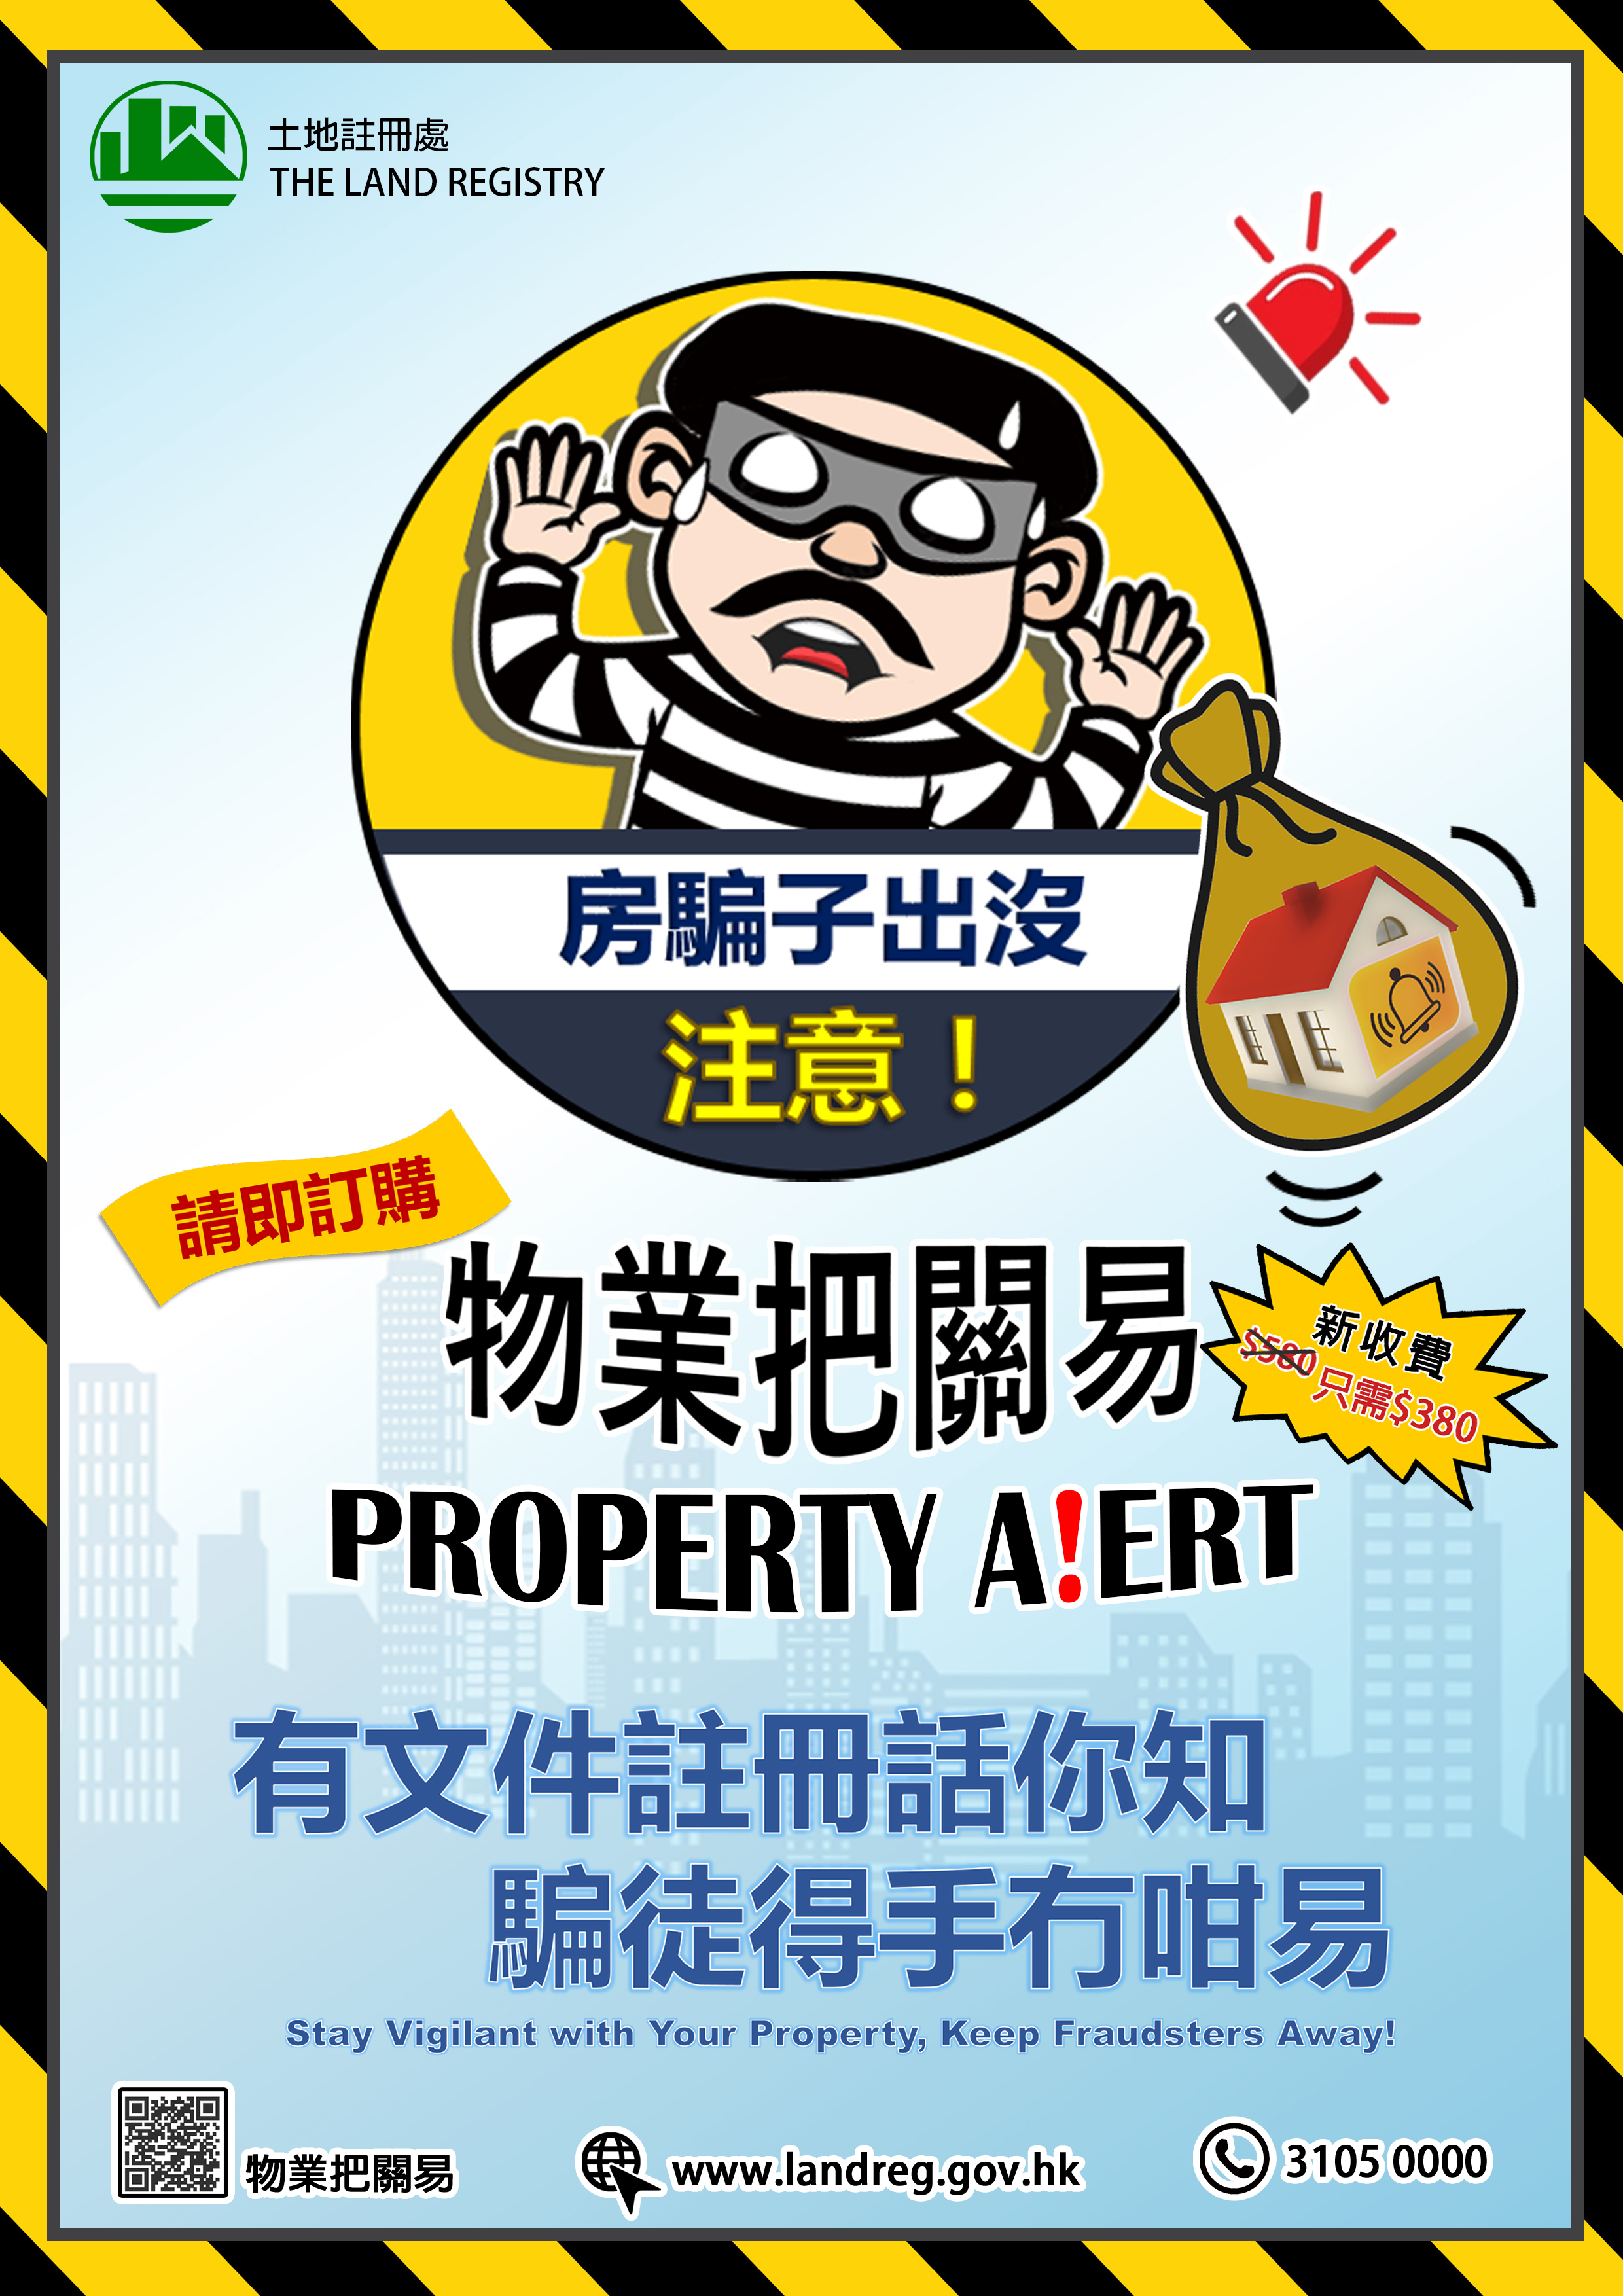 Enjoy Property Alert at Reduced Fee